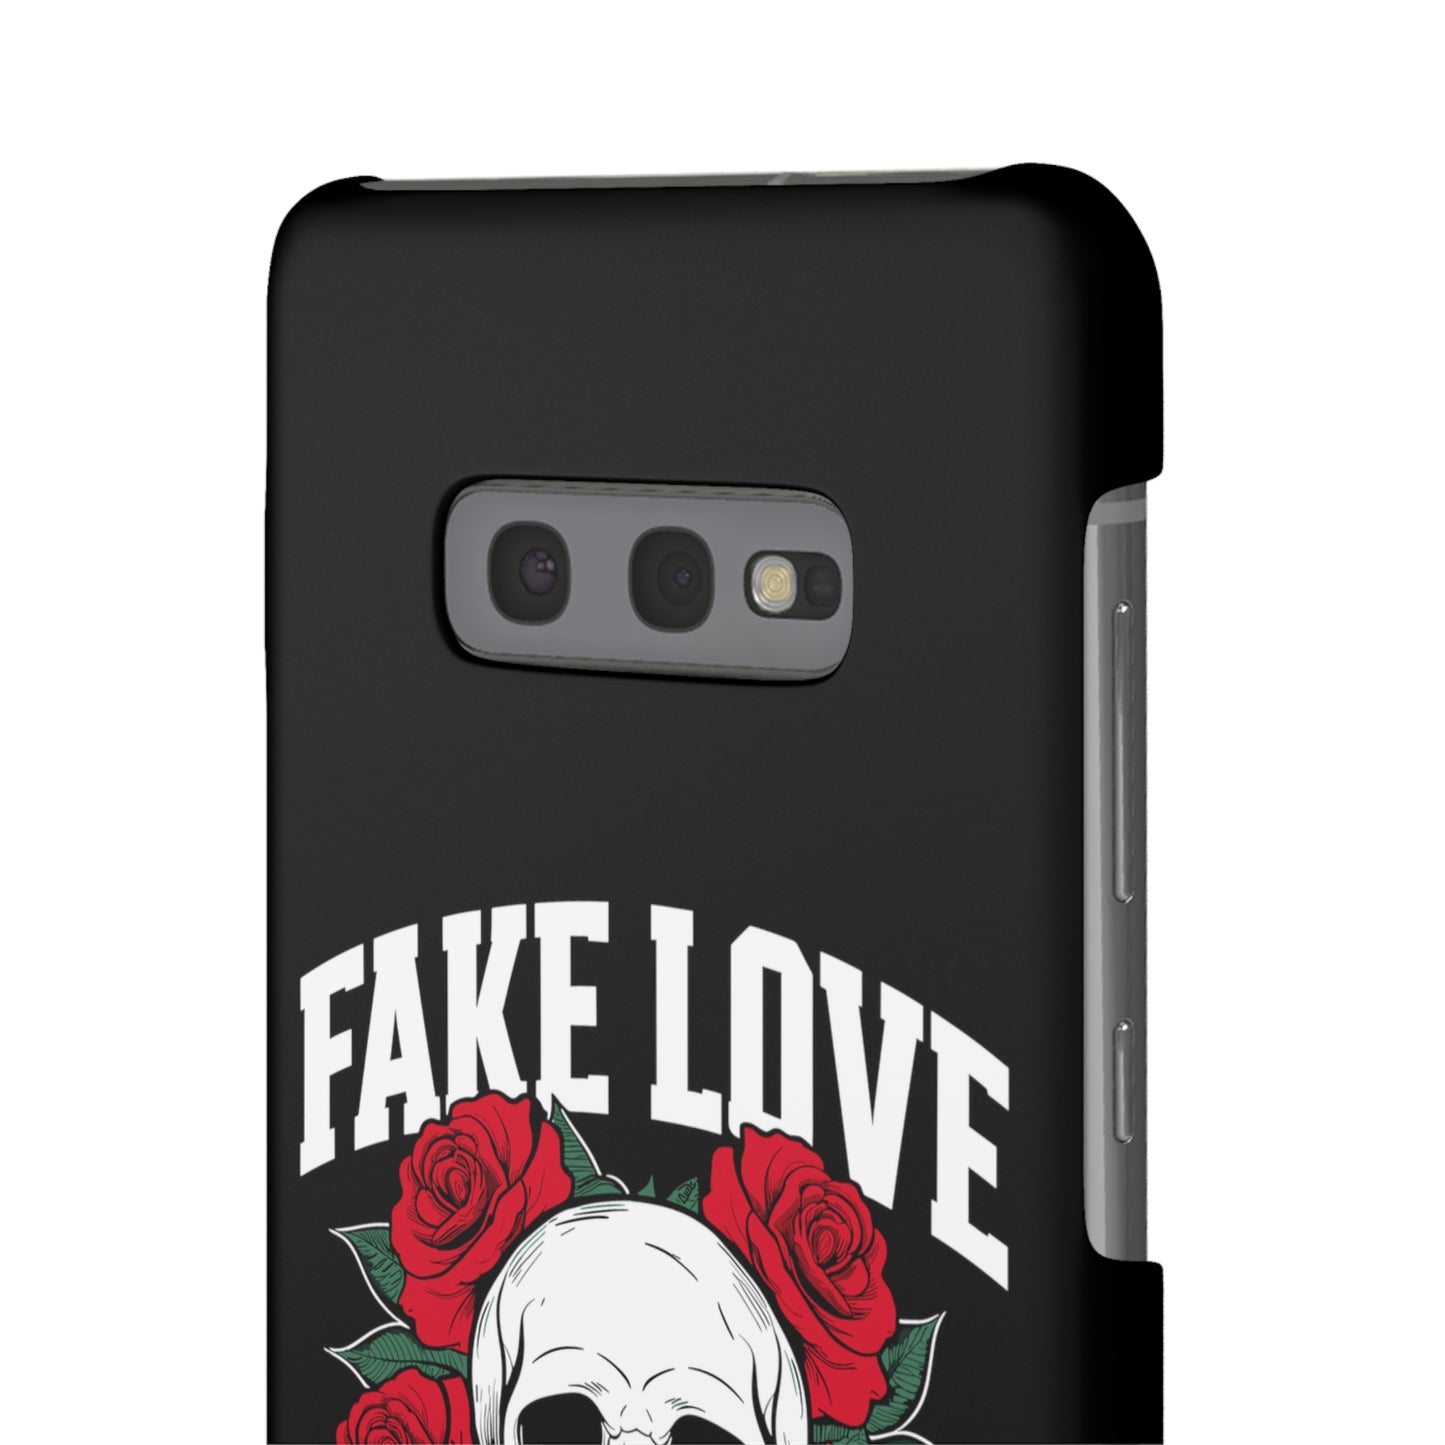 Snap Case Fake Love